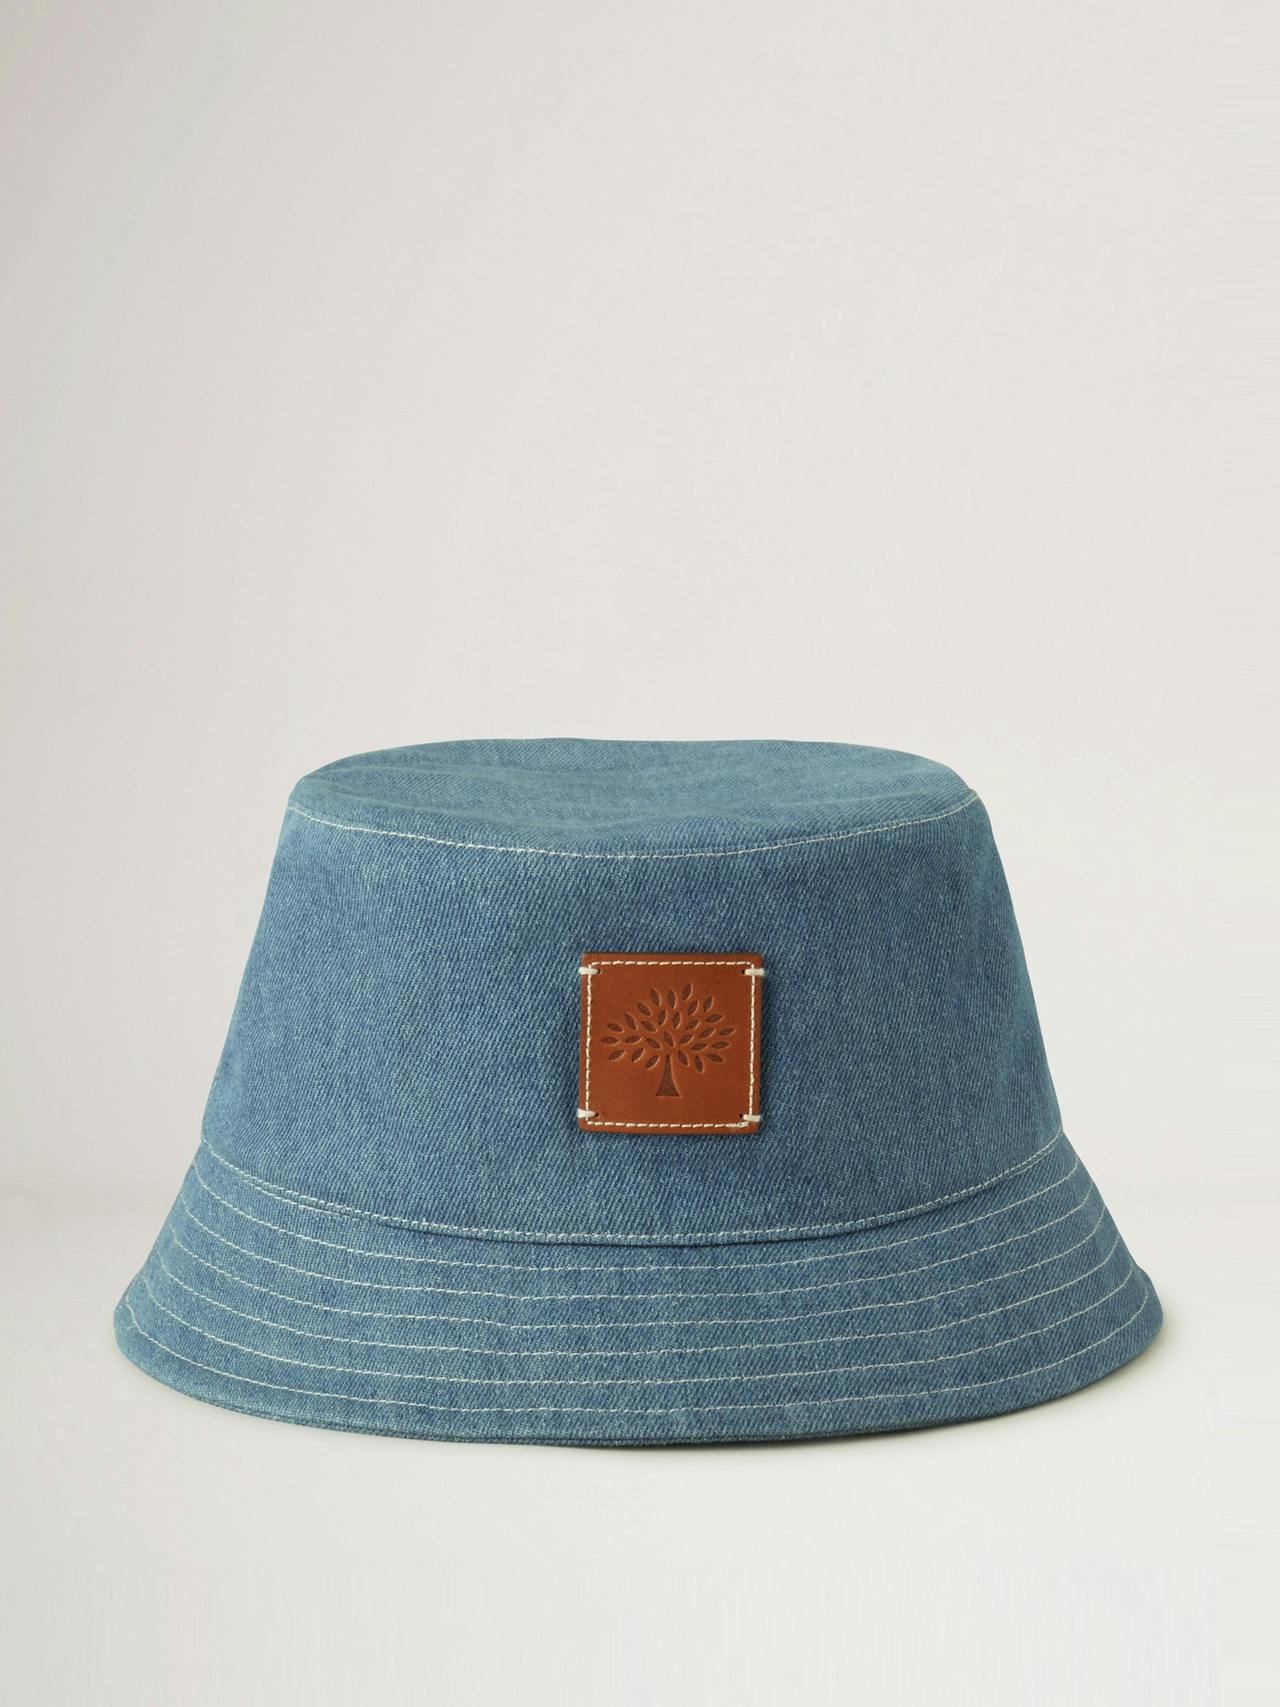 Denim bucket hat